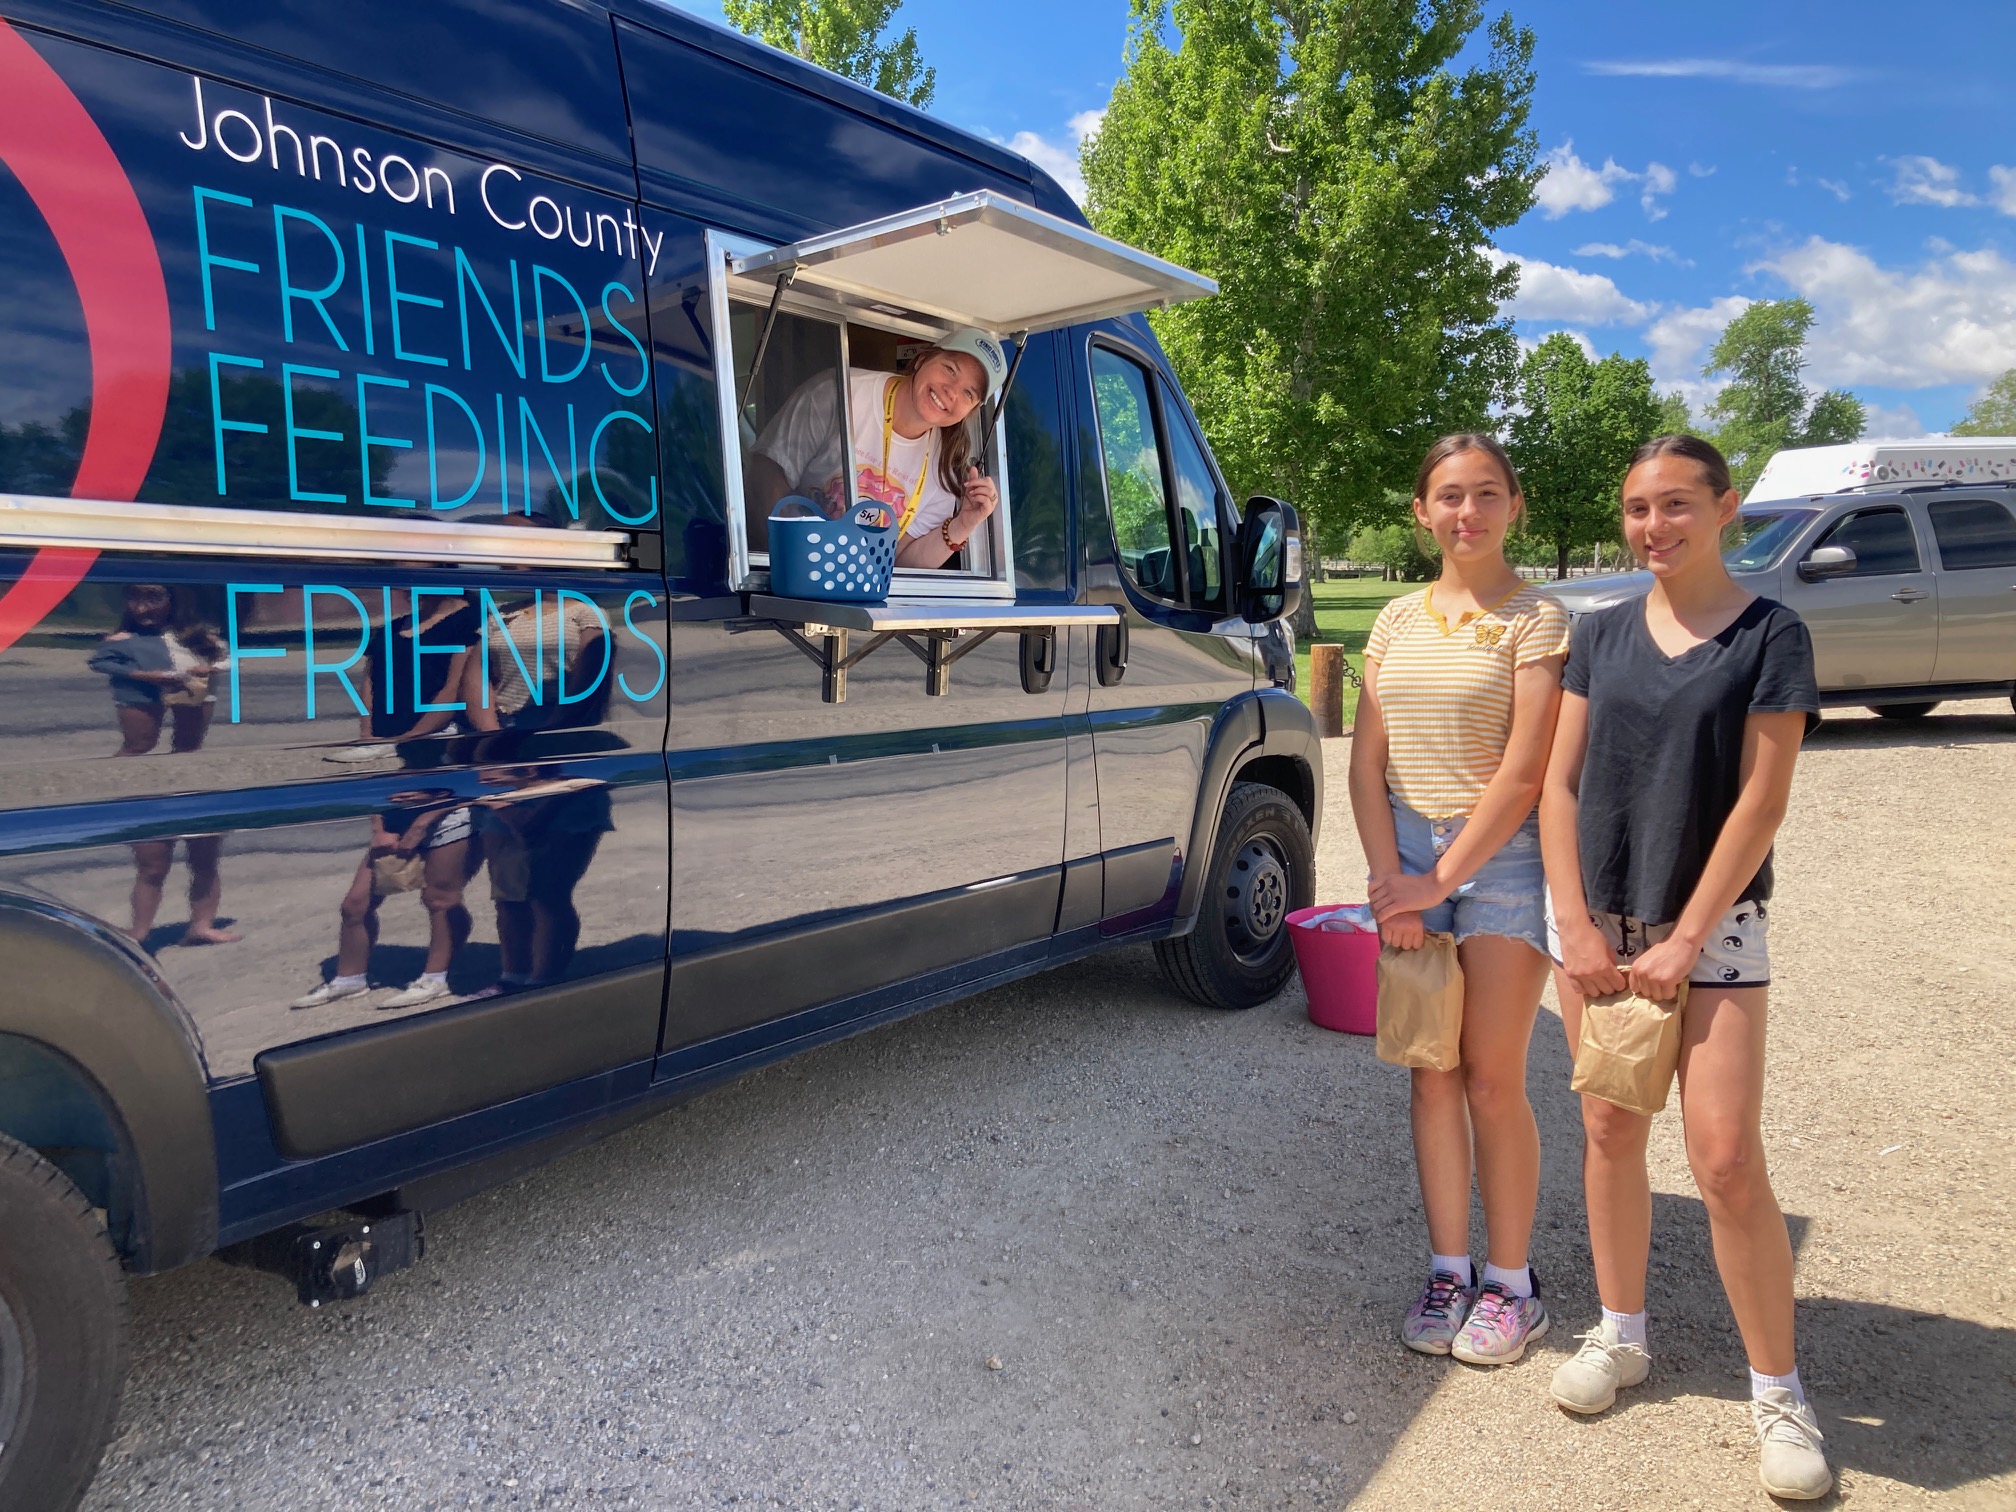 A Fantastic First Week for Johnson County Friends Feeding Friends Summer Food Program